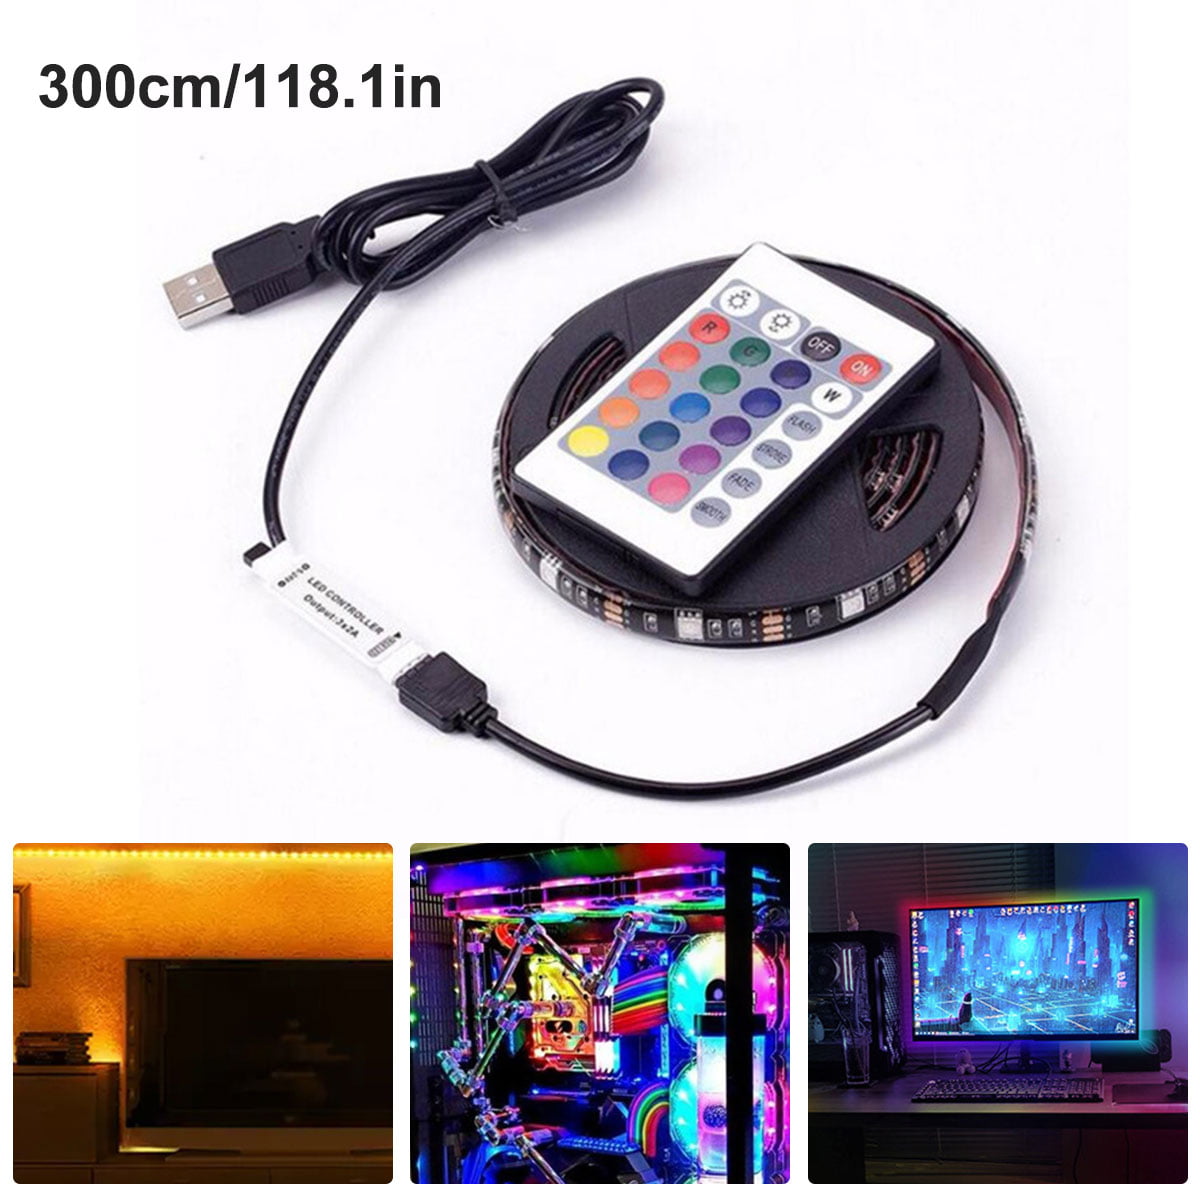 5V 5050 RGB led strip light colour changing USB Power TV PC backlight lighting 